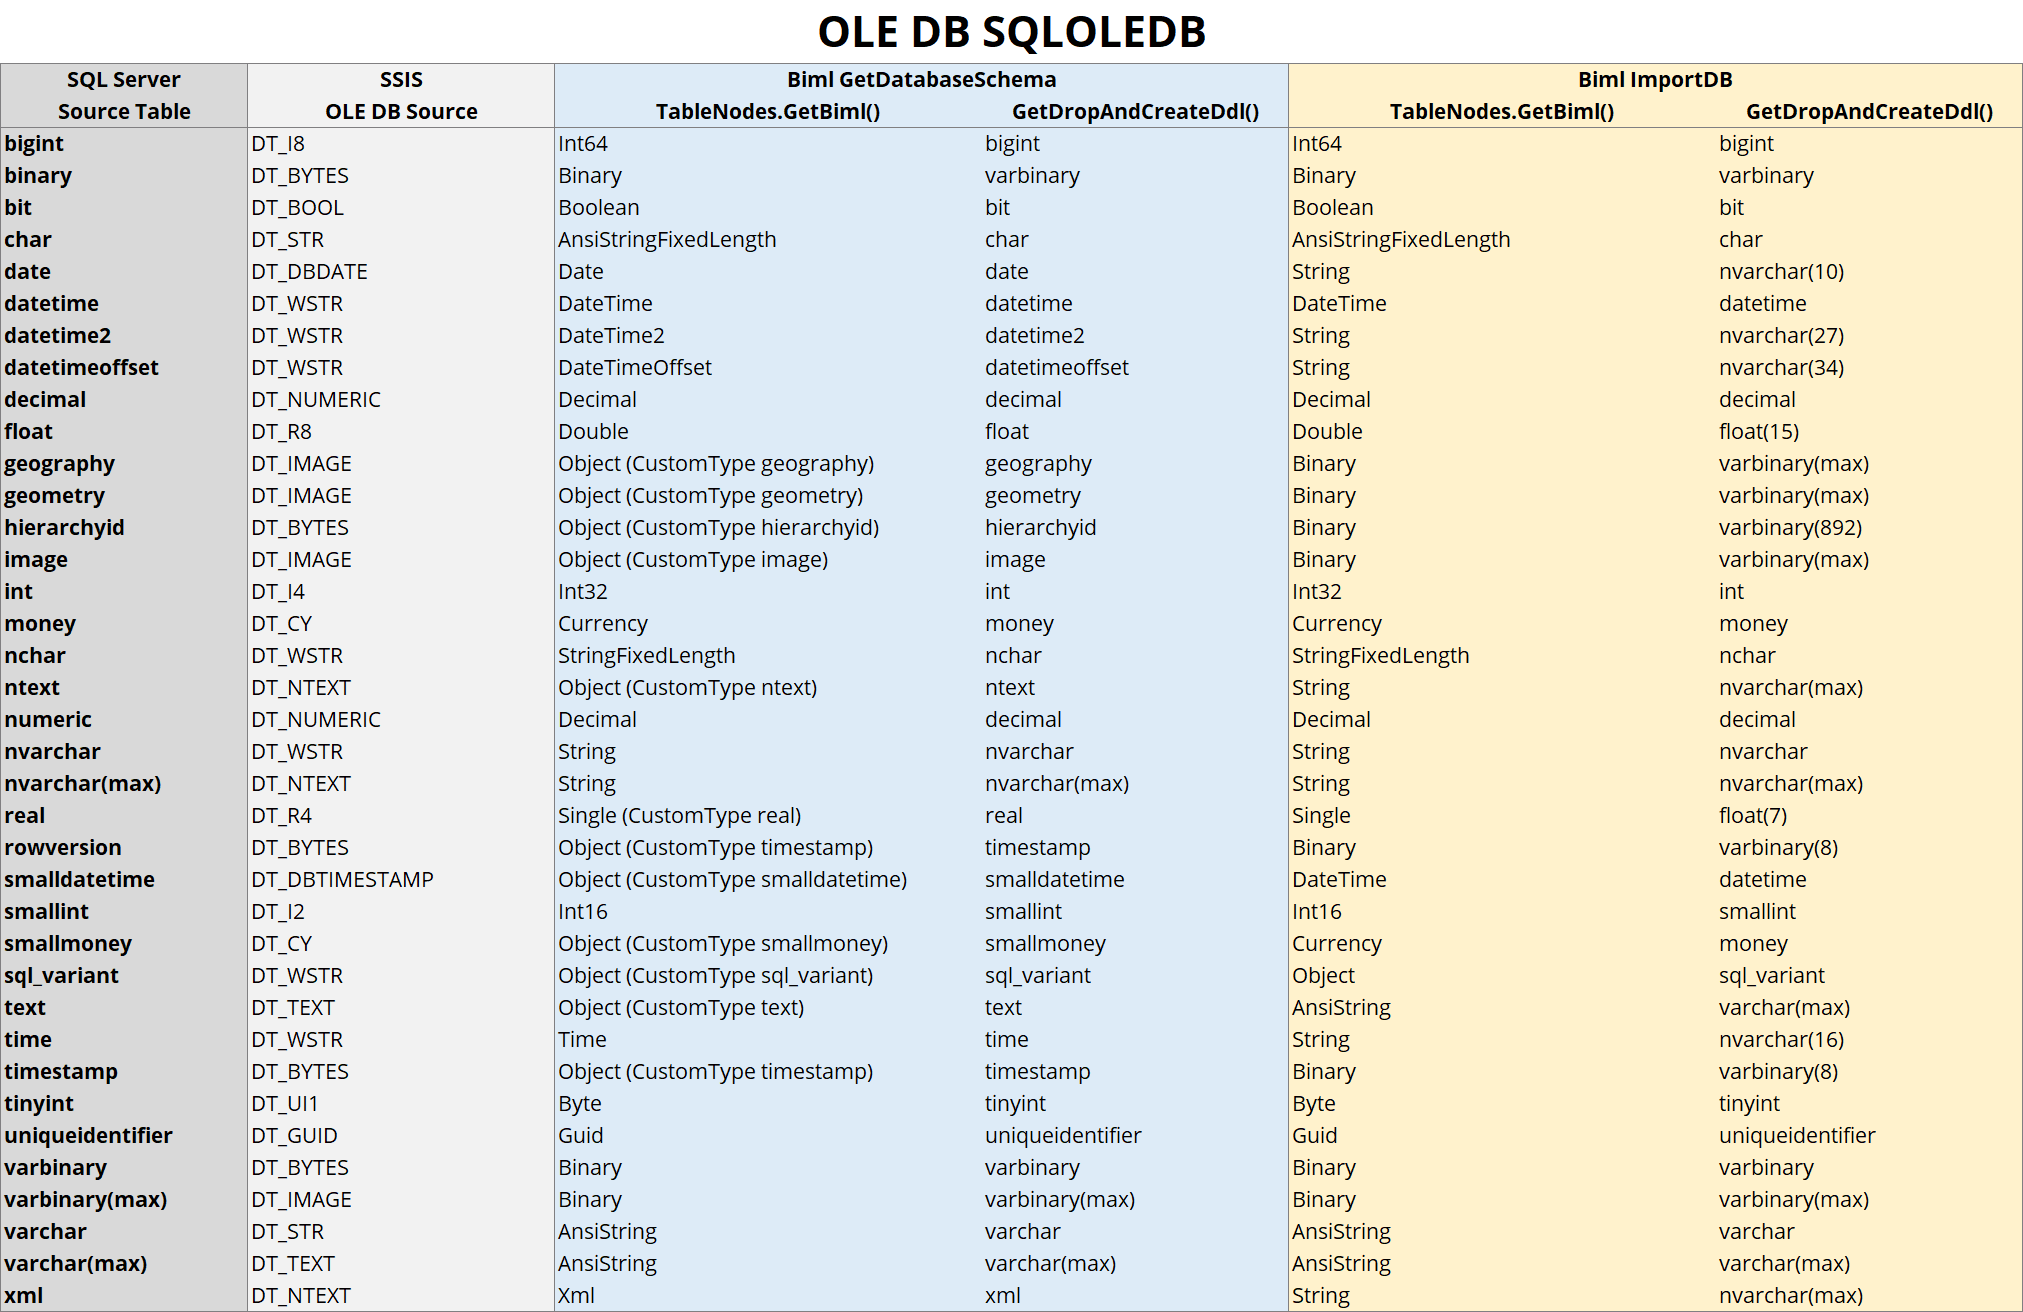 Comparison table showing SQL Server, SSIS and Biml Data Types using OLEDB (SQLOLEDB)